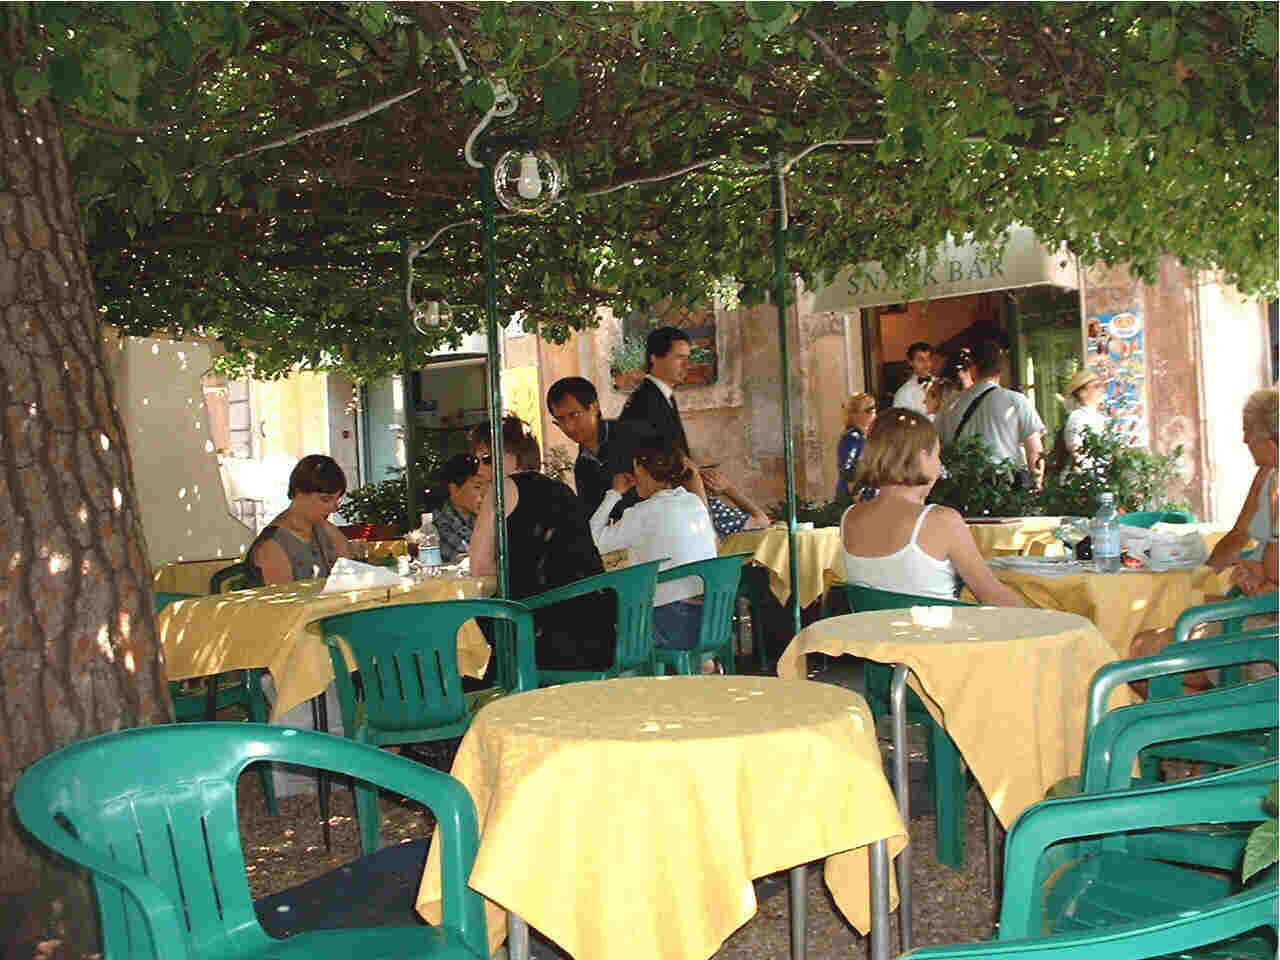 Pizzeria near the Forum